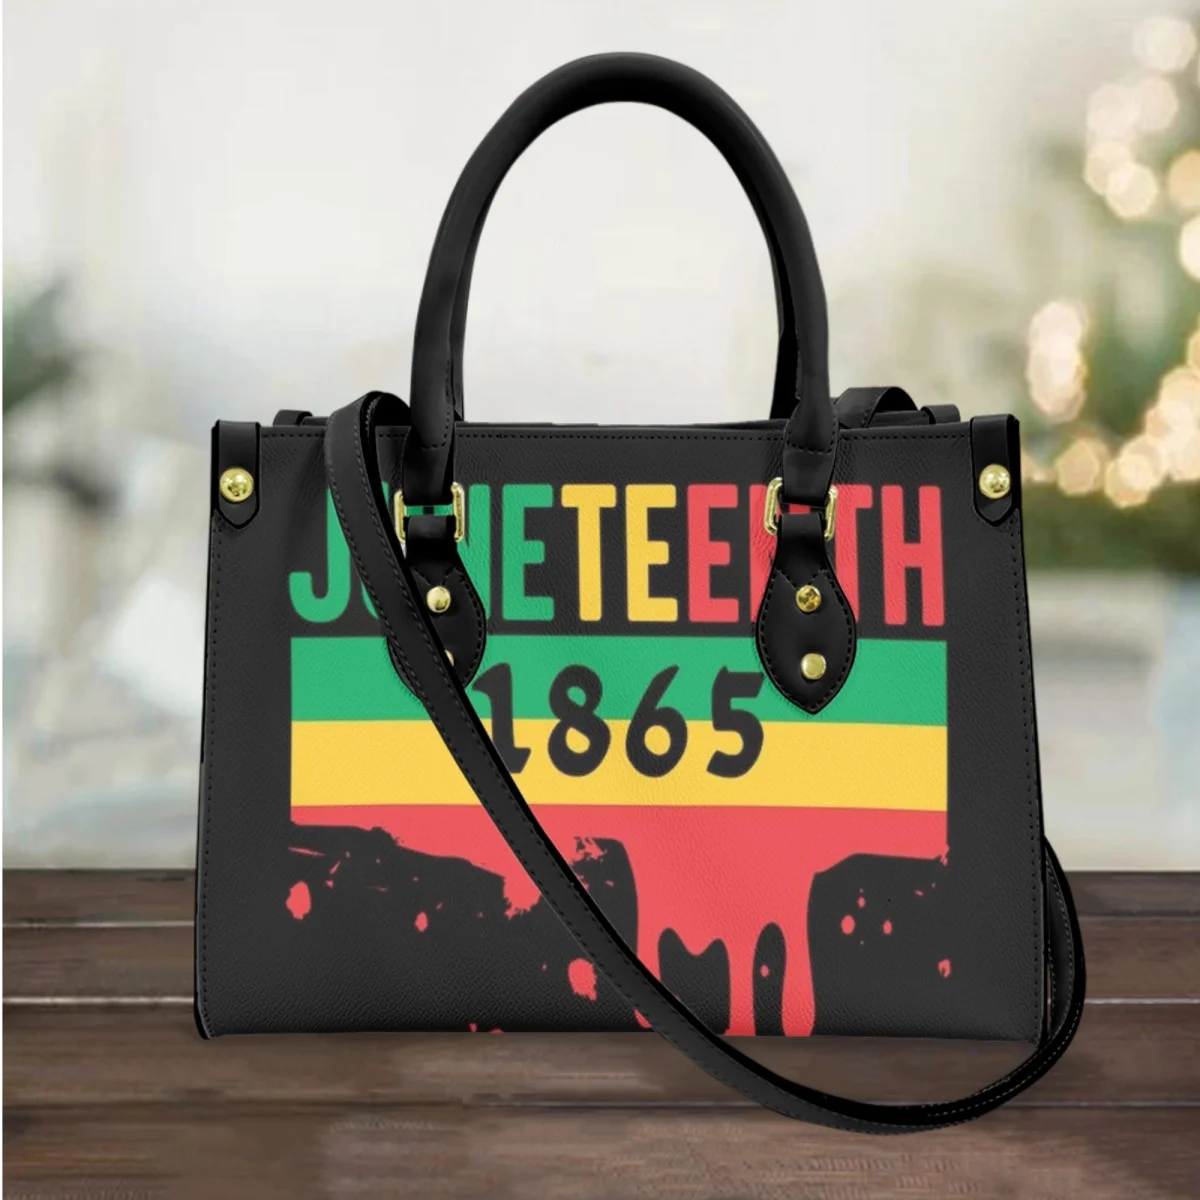 

Handbags for Women Black History Month Juneteenth 1865 Designer PU Leather Messenger Bag Practical Commuter Party Small Clutch